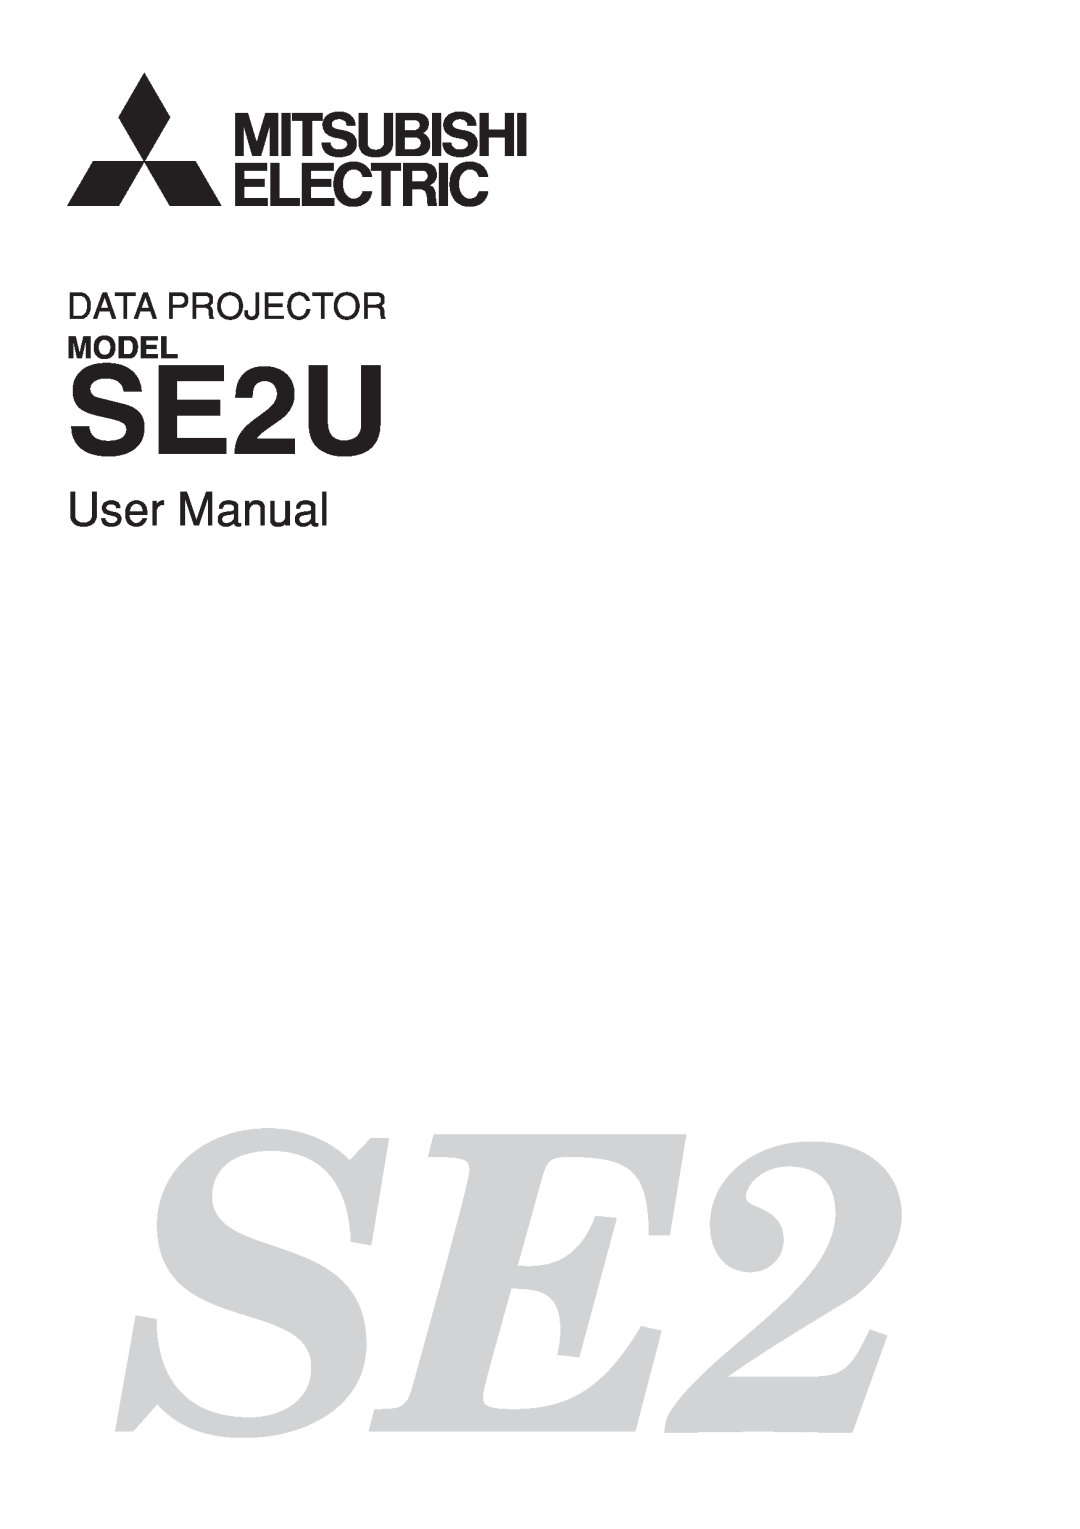 Mitsubishi Electronics SE2U user manual Model, User Manual, Data Projector 